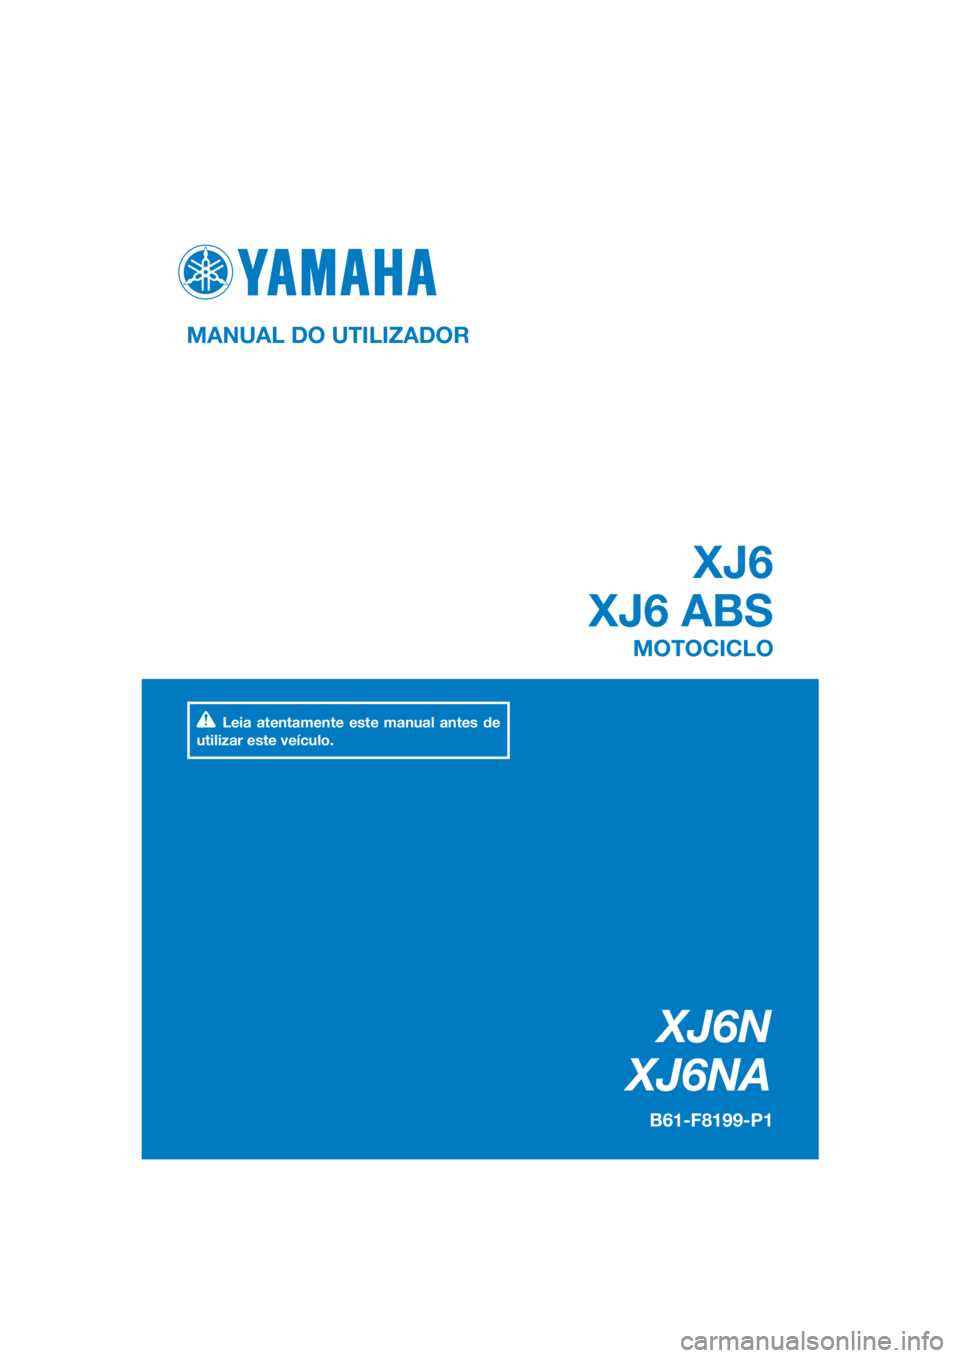 YAMAHA XJ6-N 2016  Manual de utilização (in Portuguese) DIC183
XJ6N
XJ6NA
XJ6
XJ6 ABS
MANUAL DO UTILIZADOR
B61-F8199-P1
MOTOCICLO
Leia atentamente este manual antes de 
utilizar este veículo.
[Portuguese  (P)] 